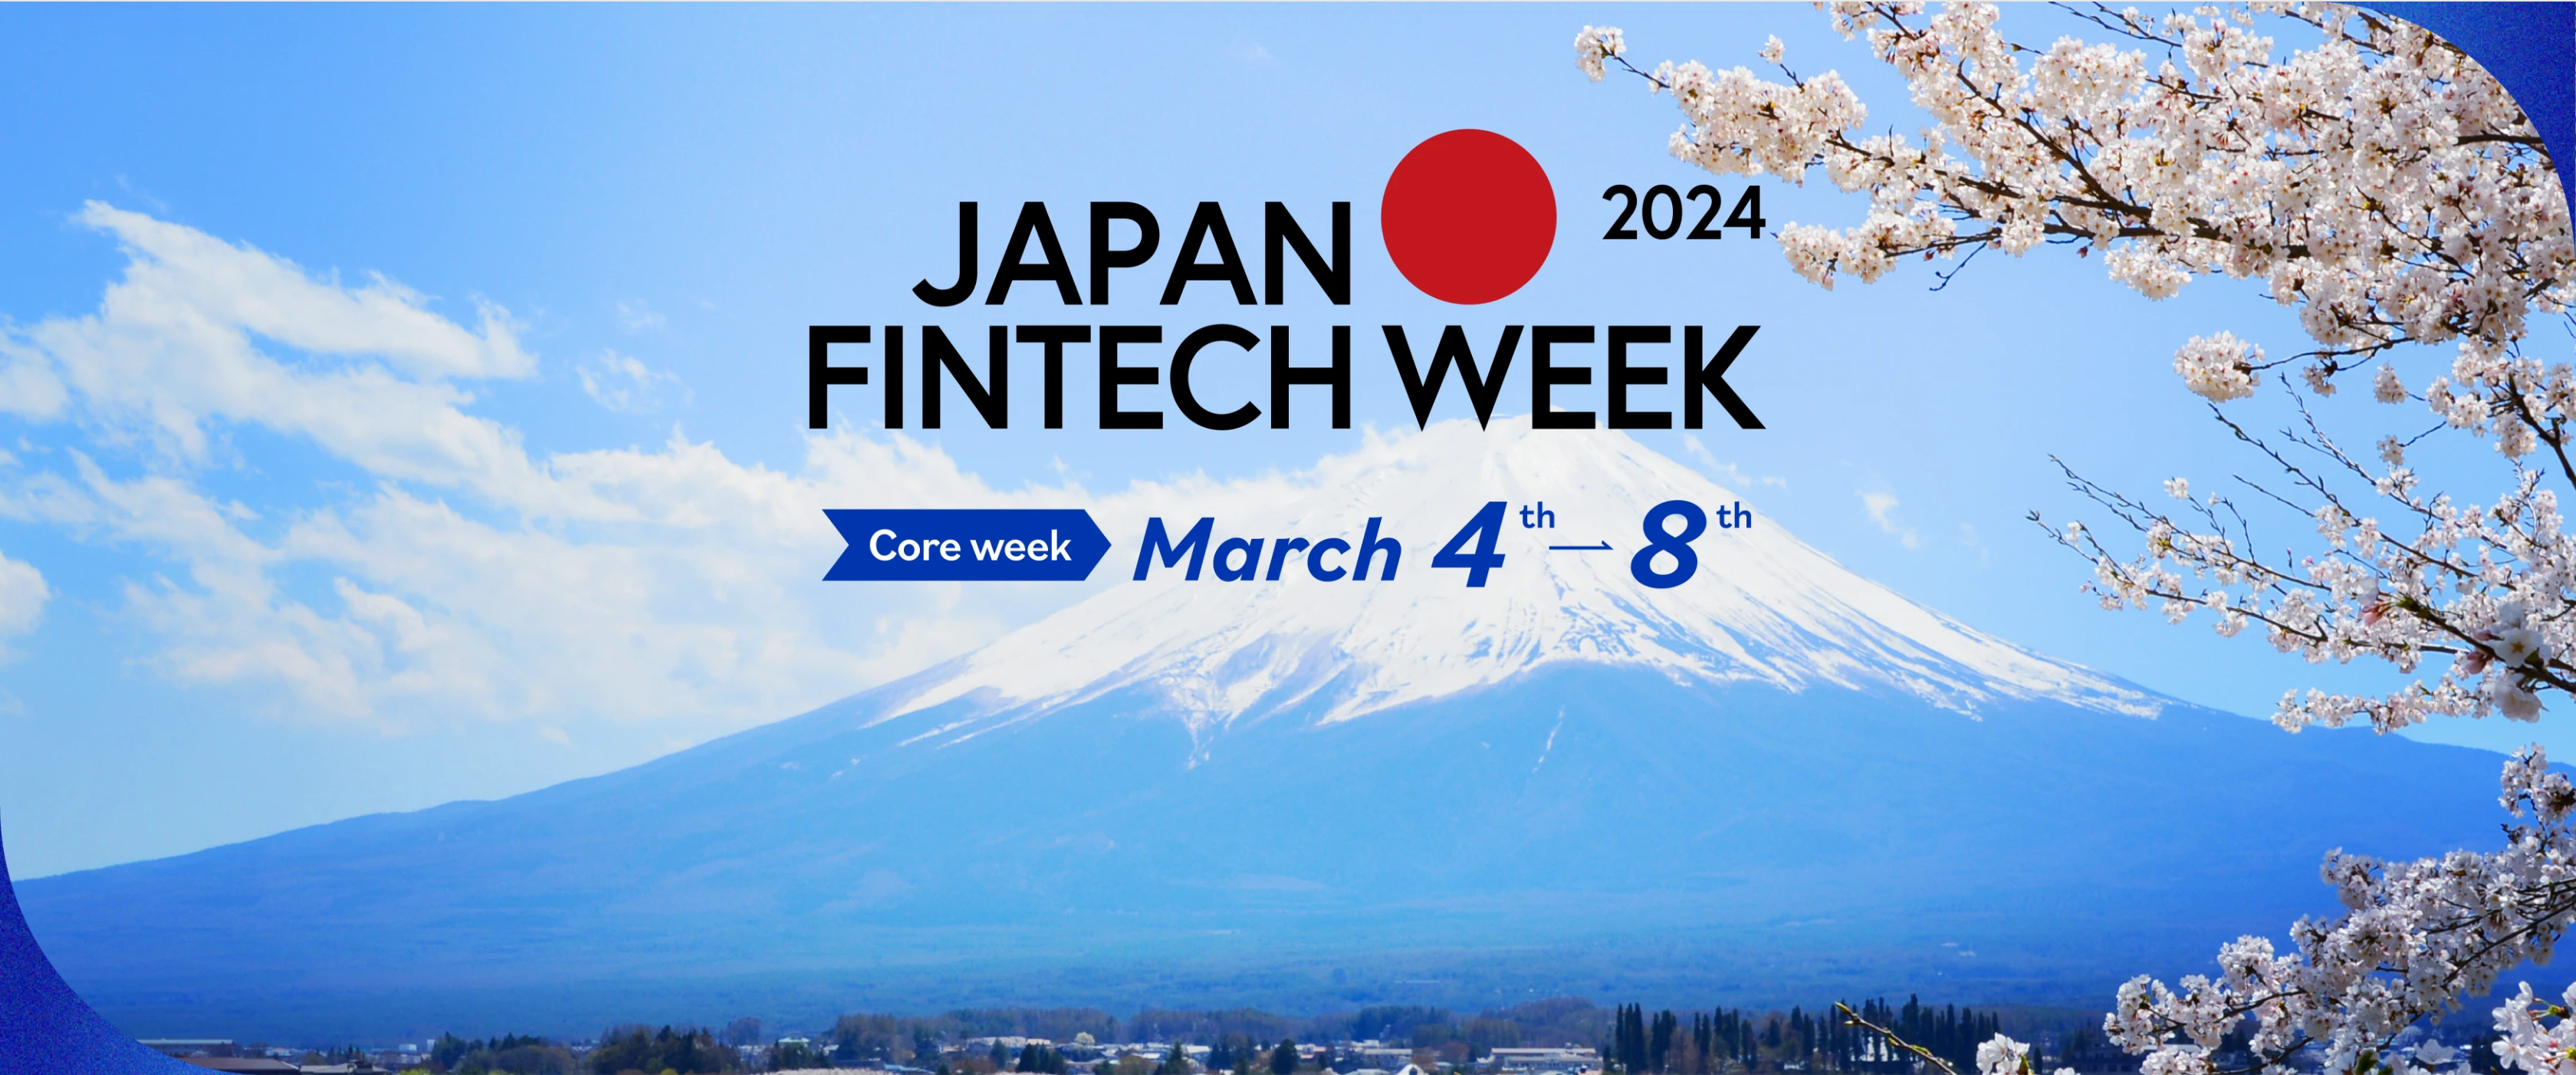 Japan Fintech Week コアウィーク 3月4日から8日まで